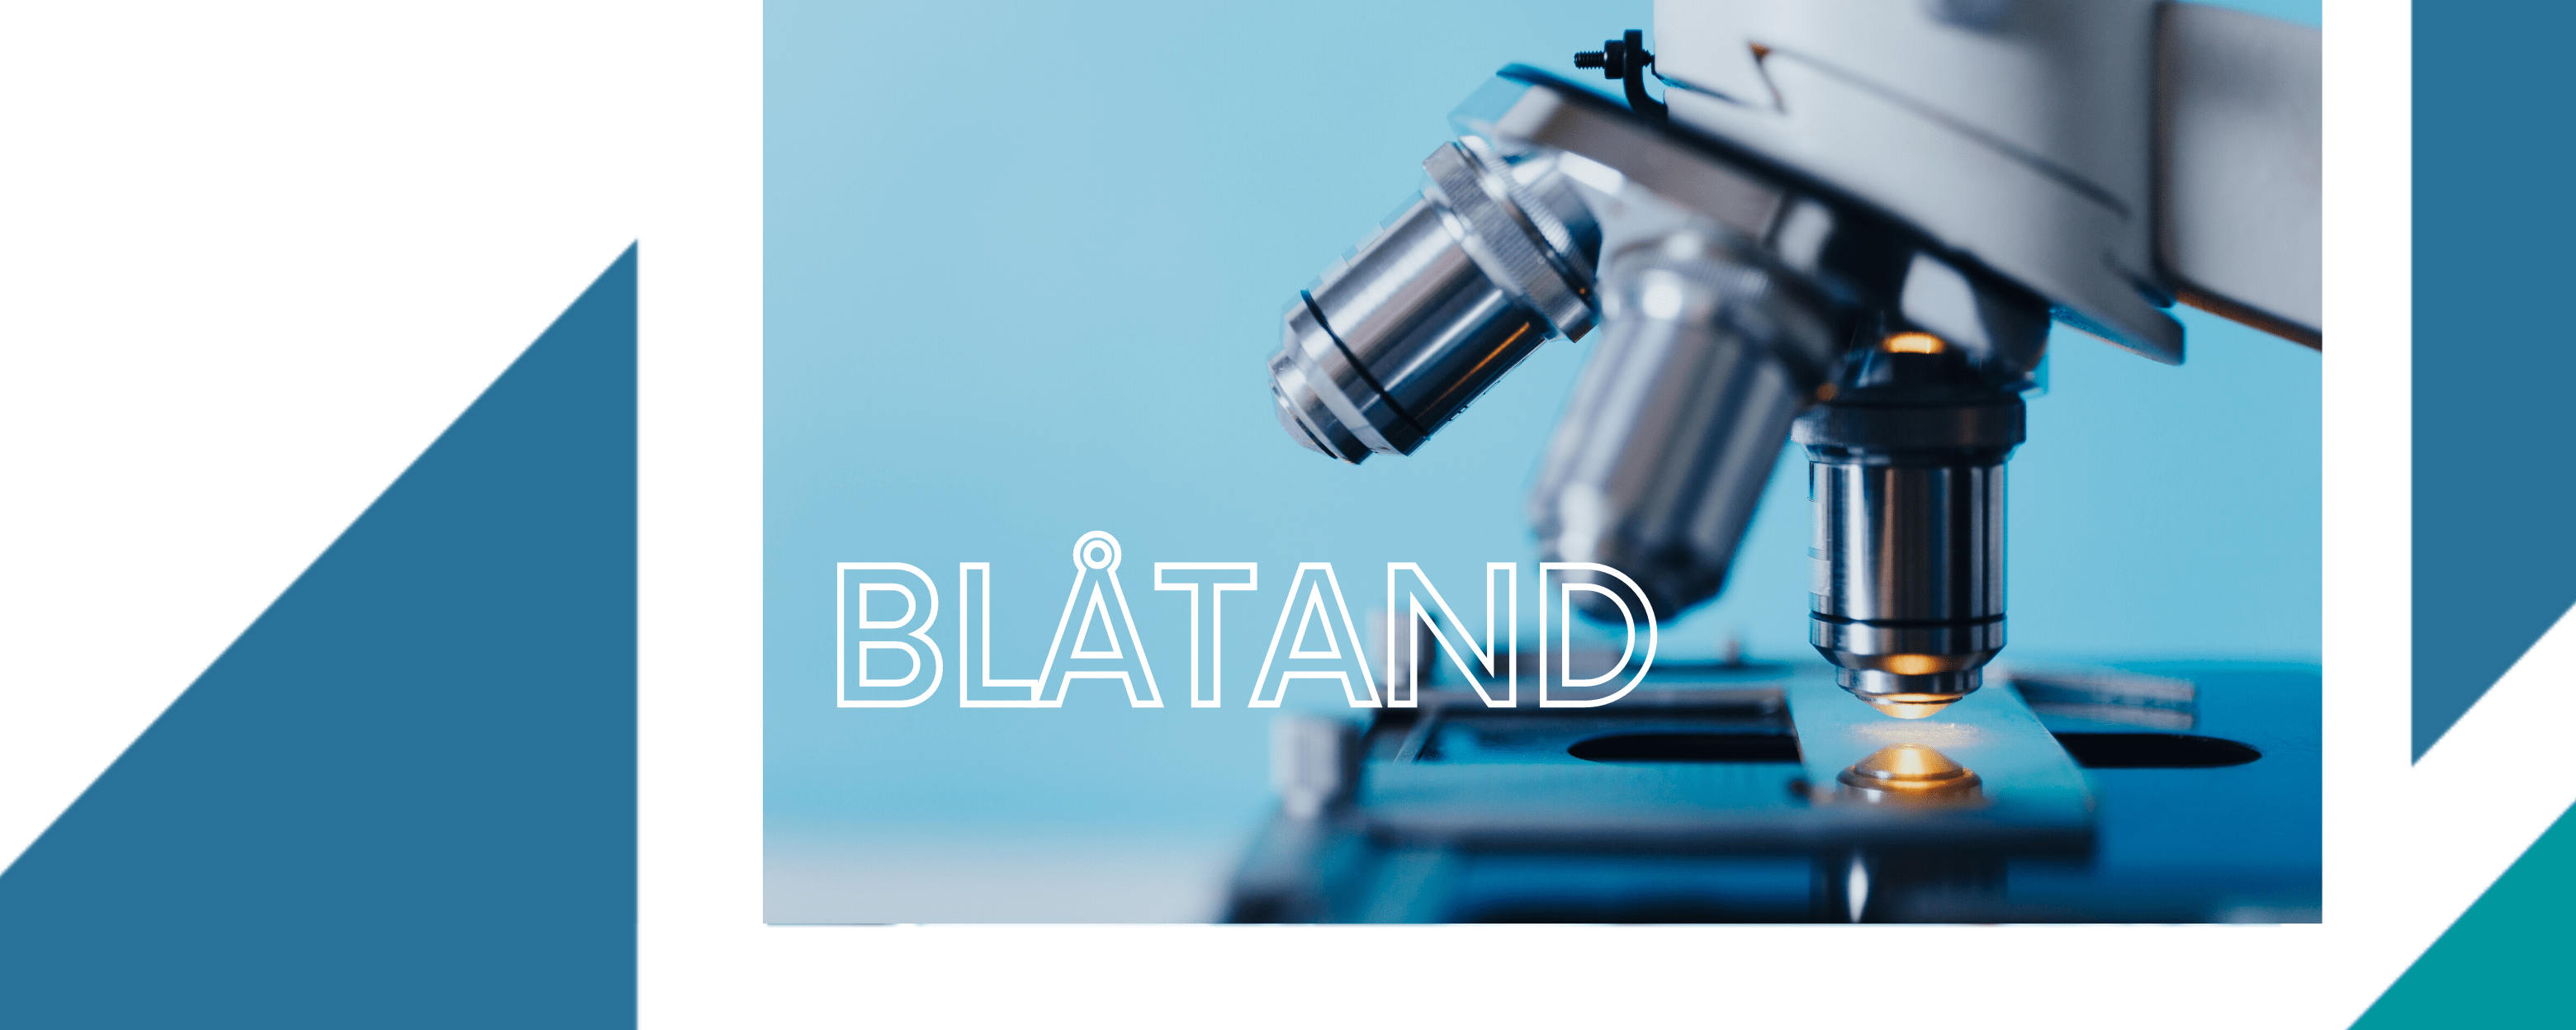 Blåtand - sciences - Institut français du Danemark 